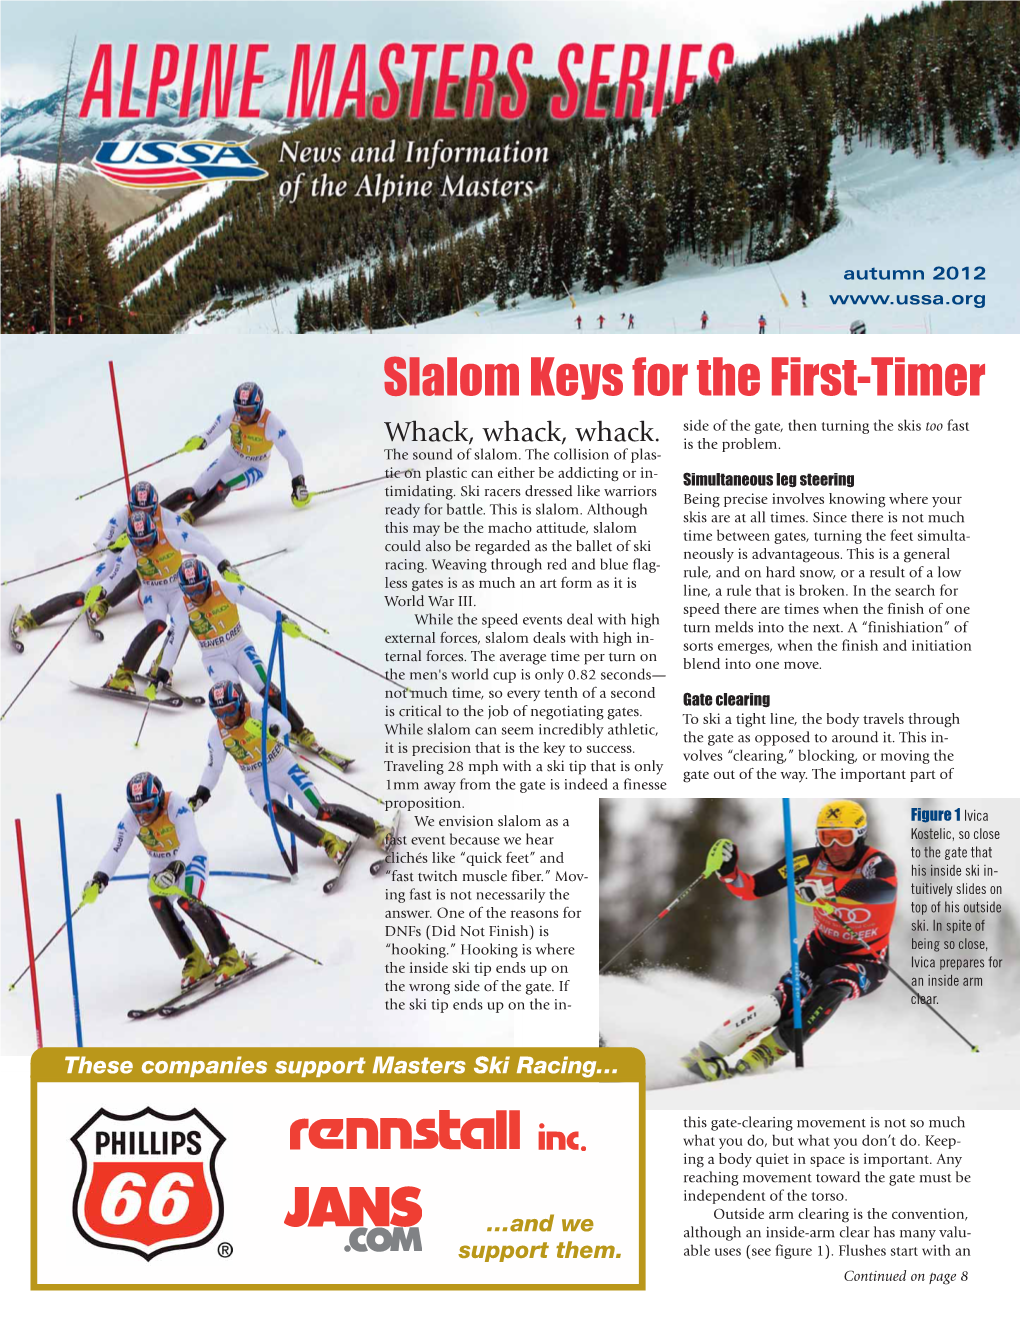 Slalom Keys for the First-Timer